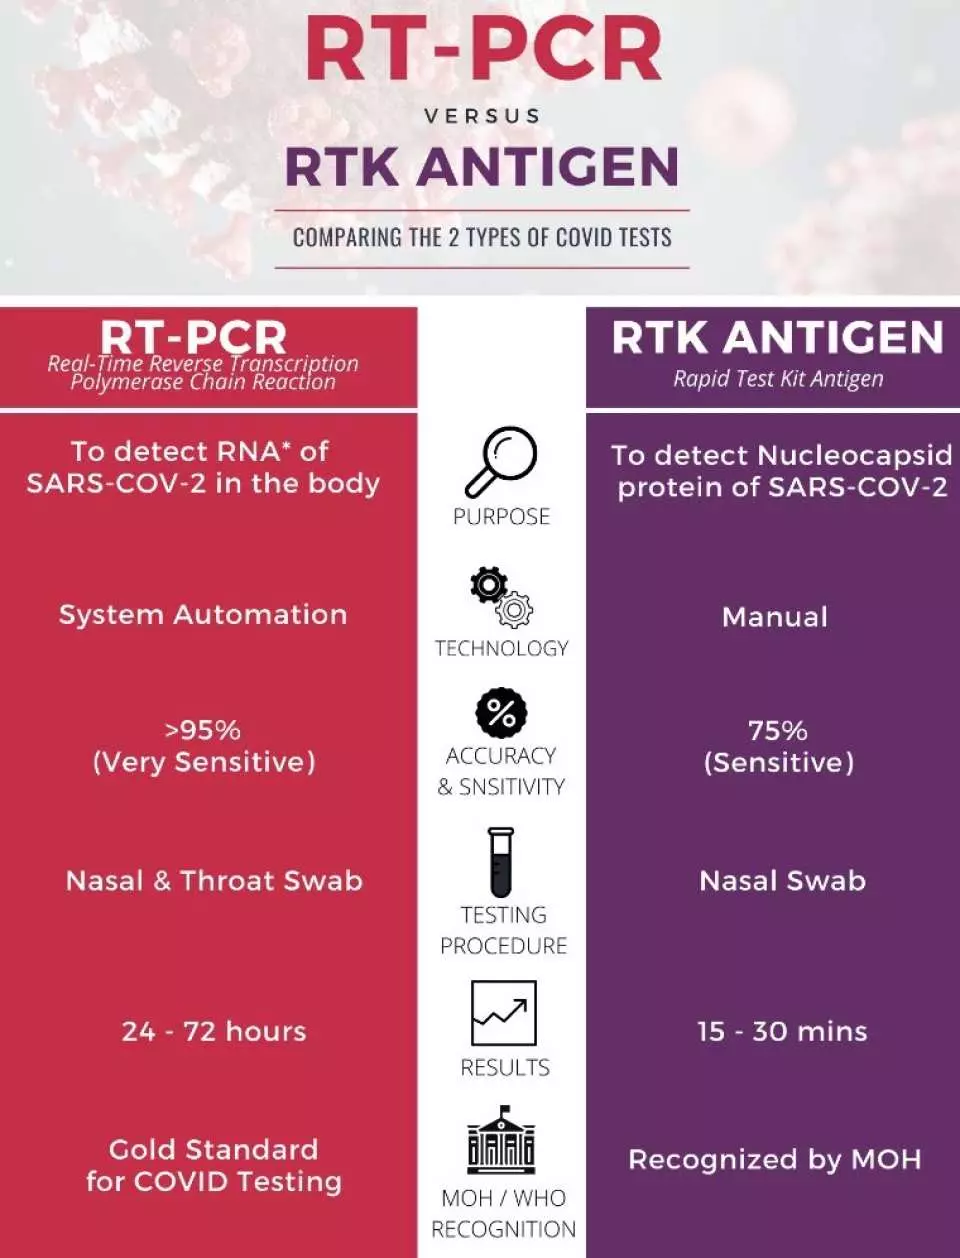 Rtk antigen test 是 什么